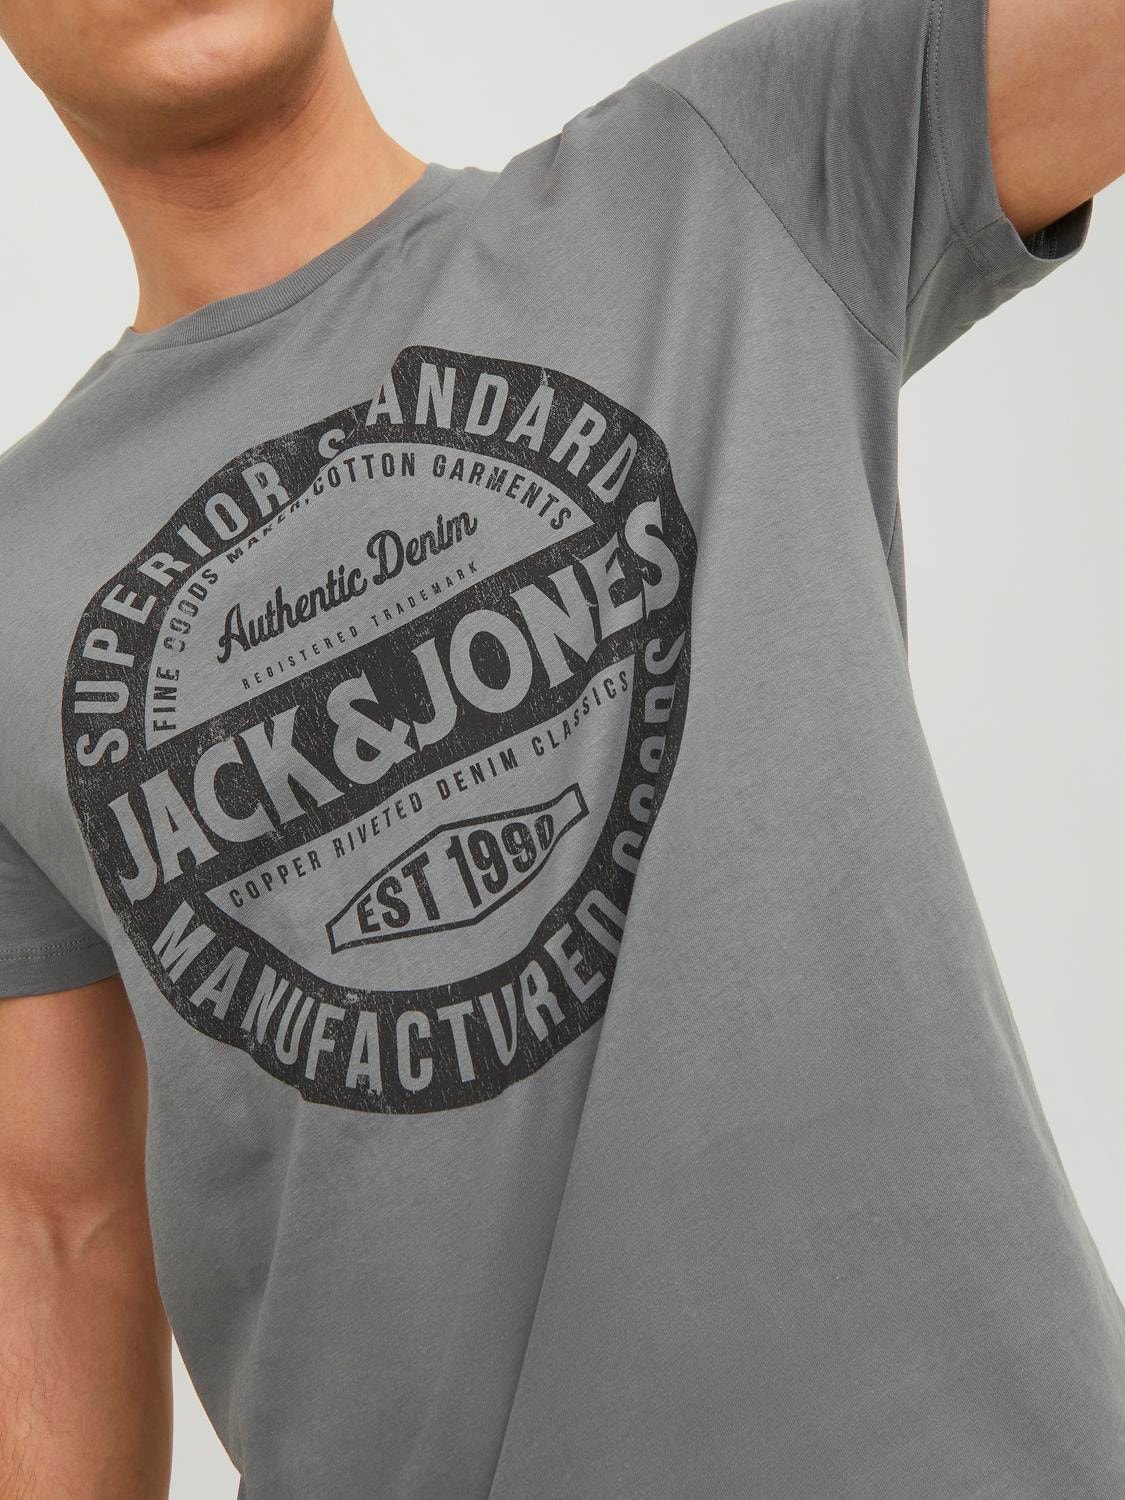 Jack & Jones Logo O-Neck T-shirt -Sedona Sage - 12232972